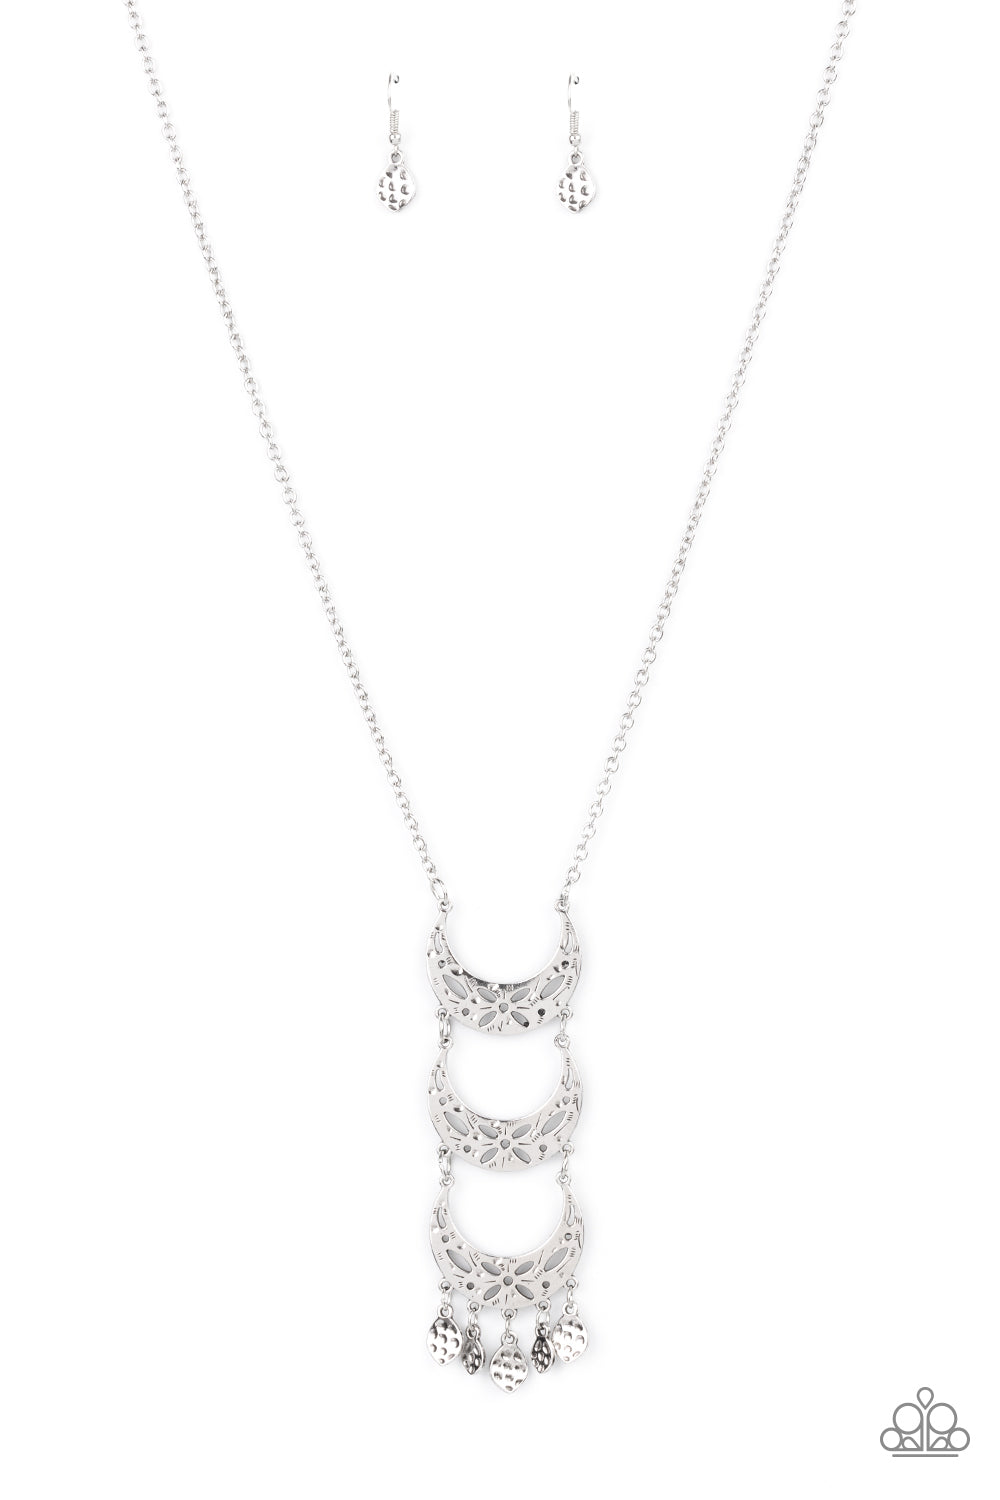 Paparazzi - Half-Moon Child - Silver Necklace